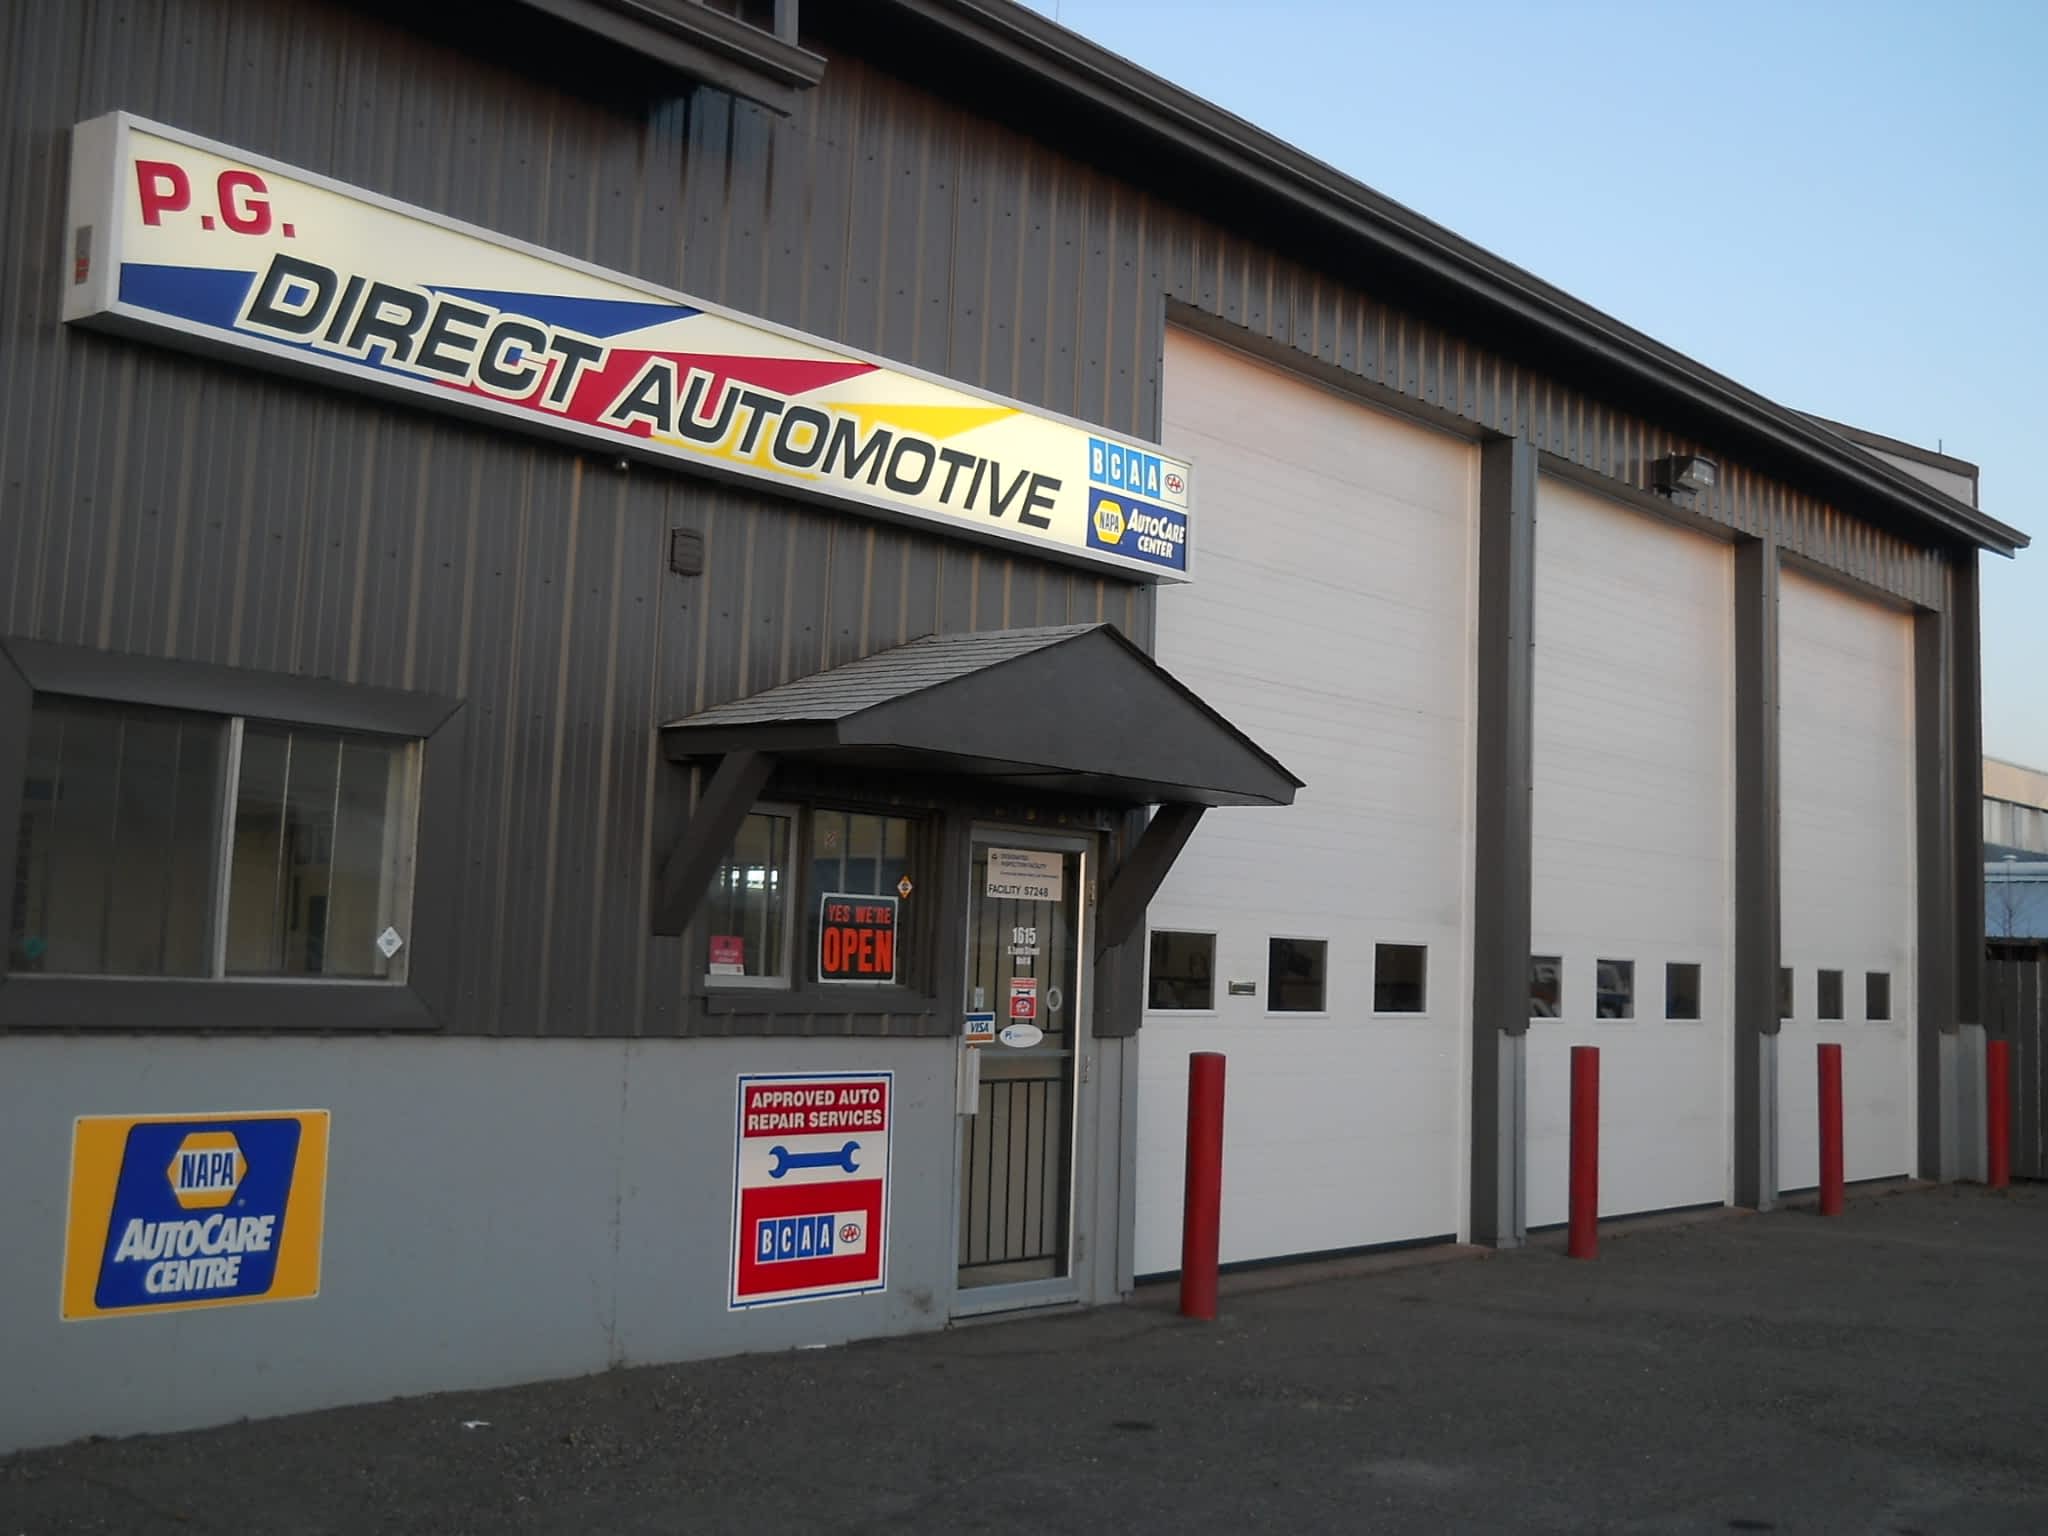 photo PG Direct Automotive Care & Repair